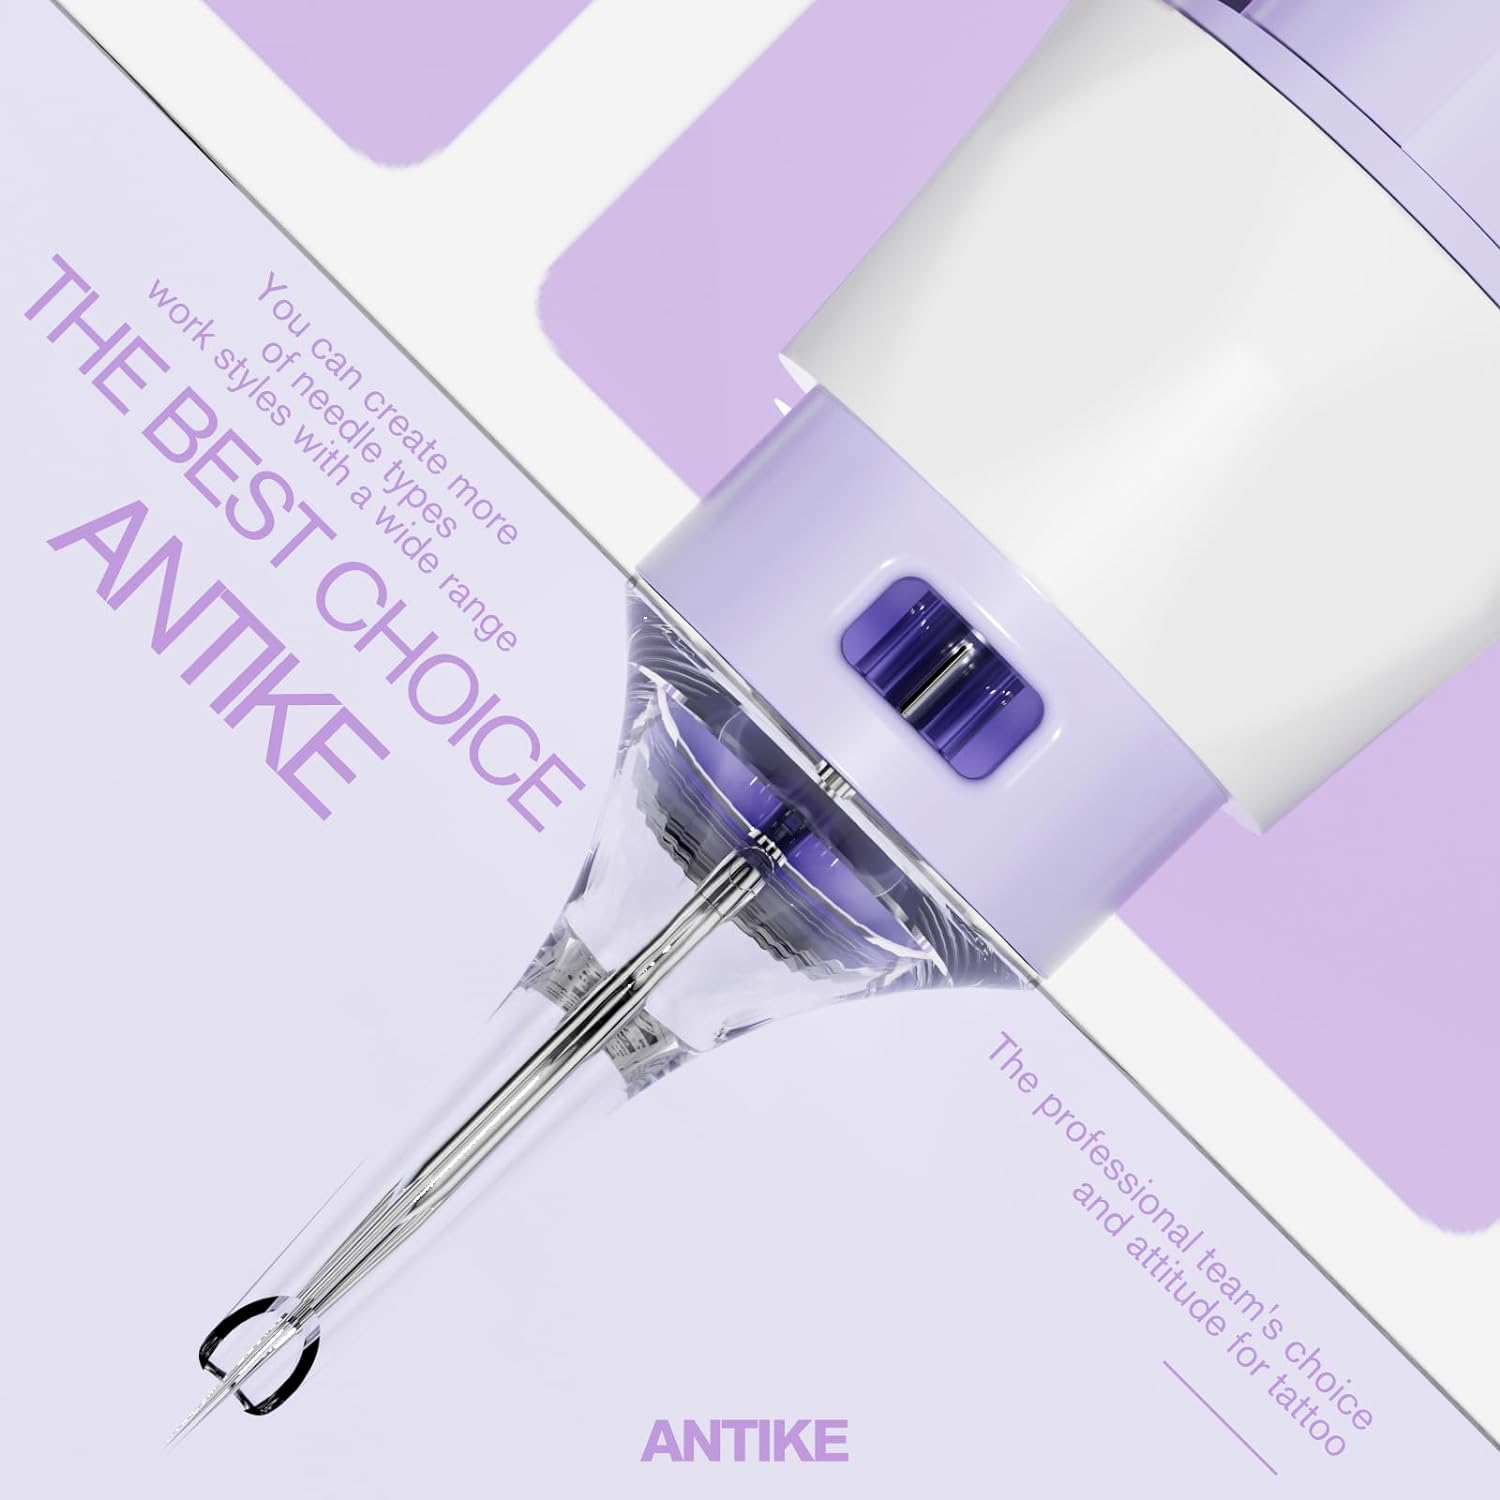 ANTIKE Clouds Pro Tattoo Cartridge Needles, the best choice